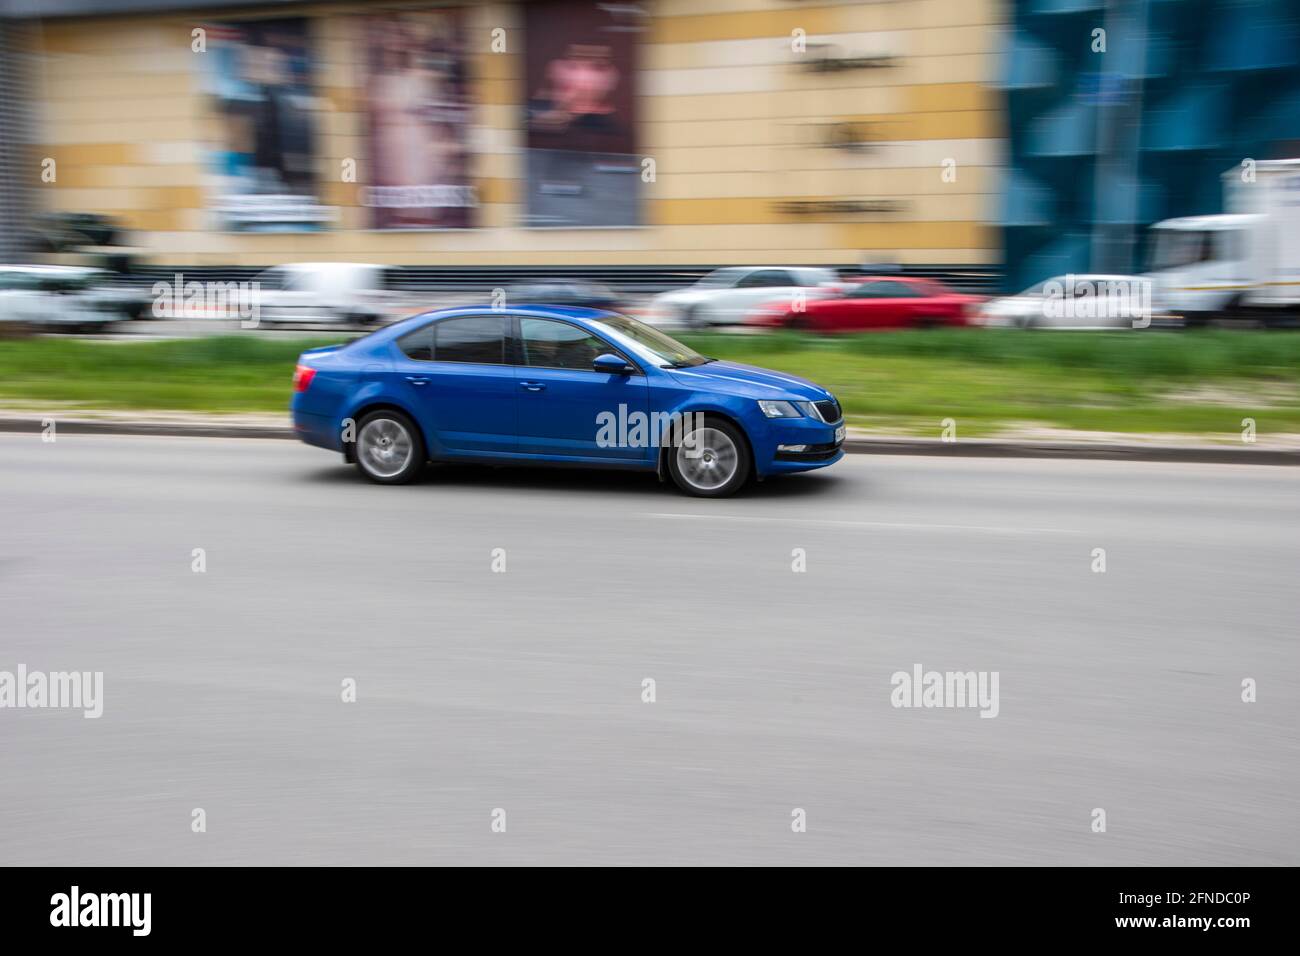 Ukraine, Kyiv - 26 April 2021: Blue Skoda Octavia car moving on the street. Editorial Stock Photo